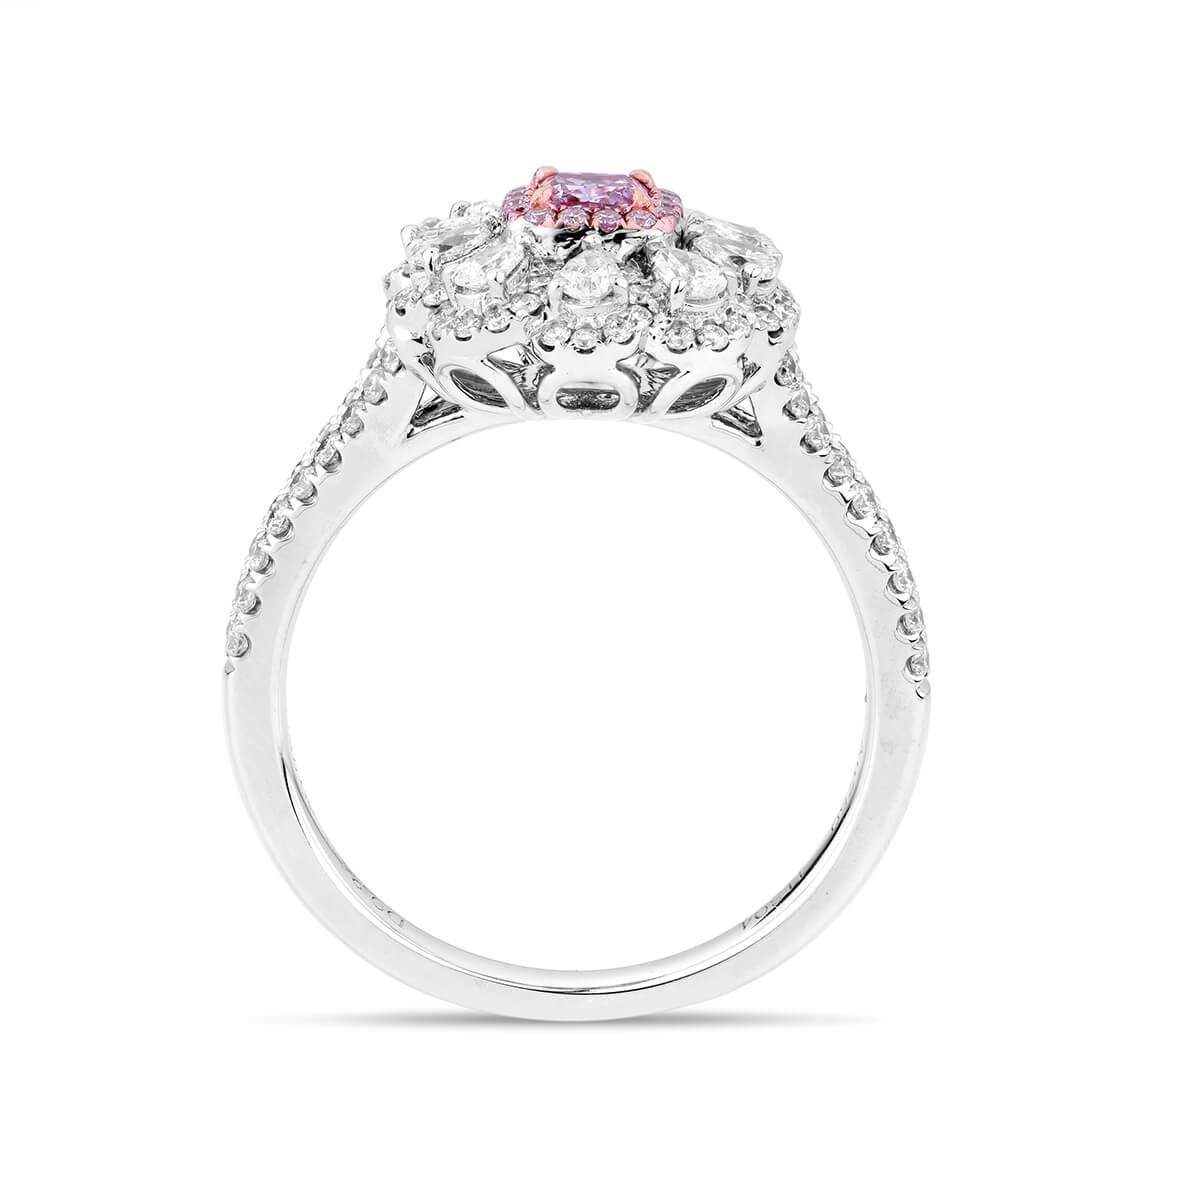 Fancy Light Purplish Pink Diamond Ring, 1.03 Ct. TW, Radiant shape, GIA Certified, 5192333264